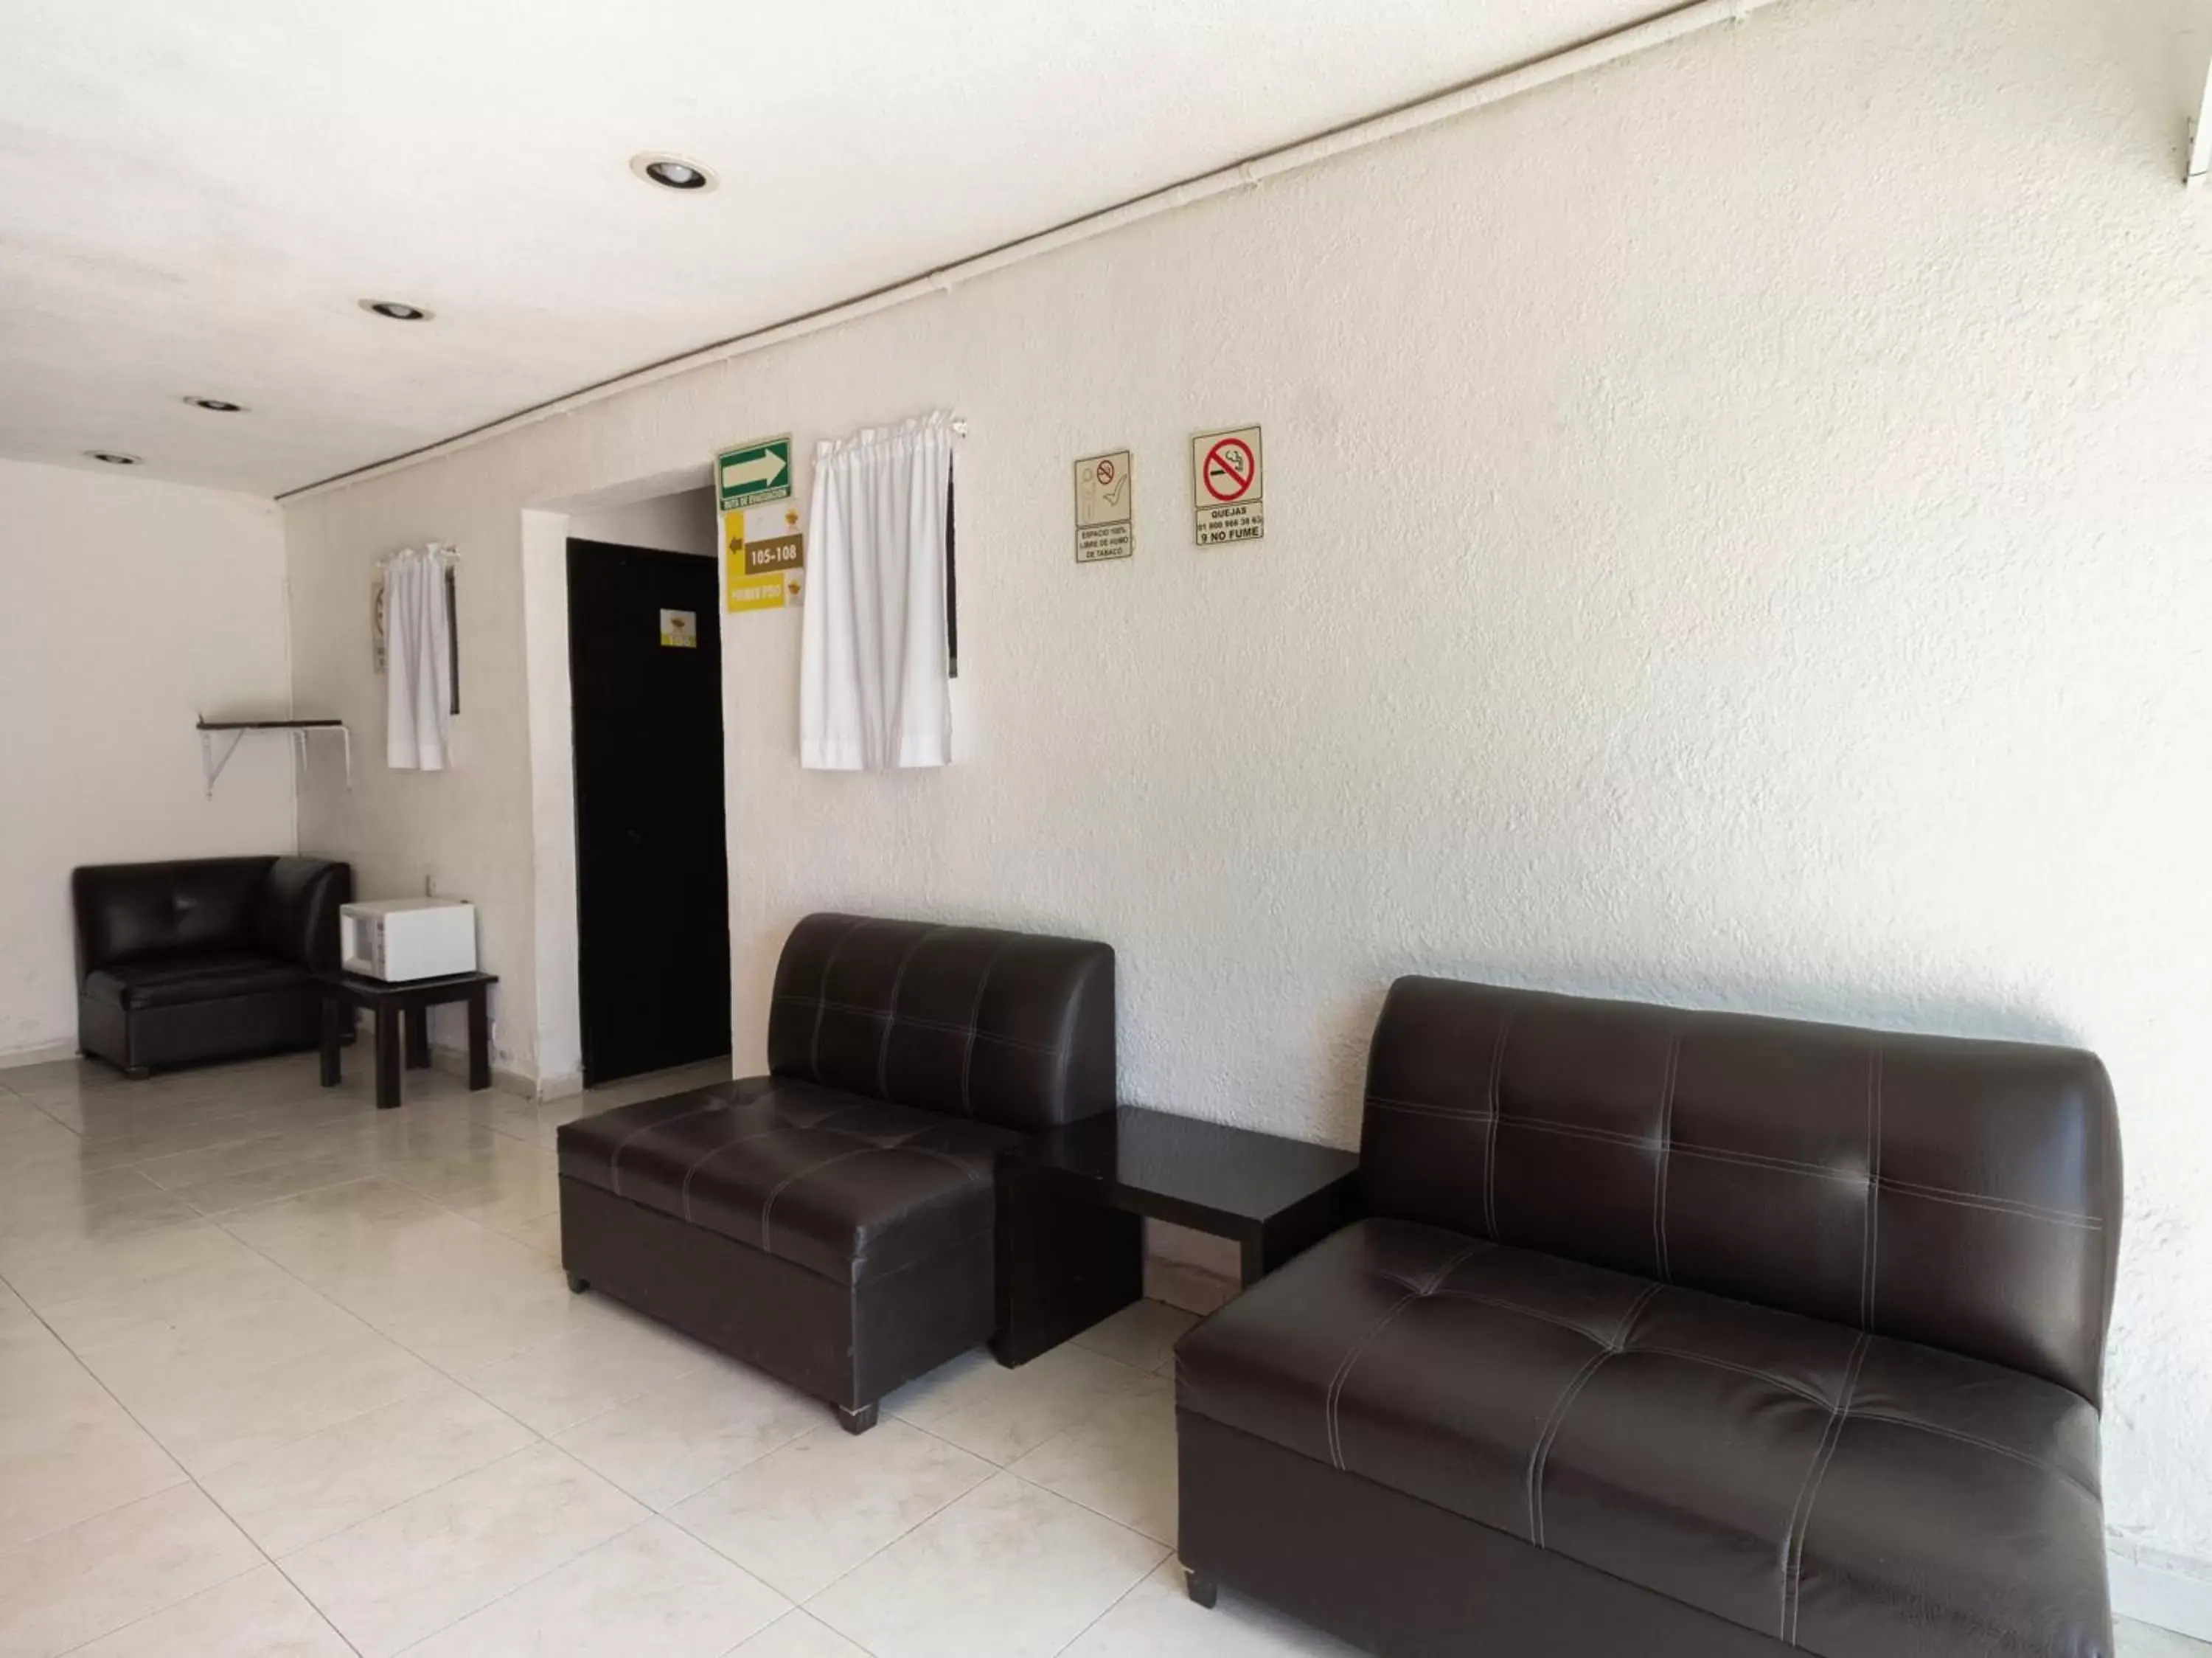 Other, Seating Area in OYO Hotel Puesta del Sol, Santa Ana, Campeche